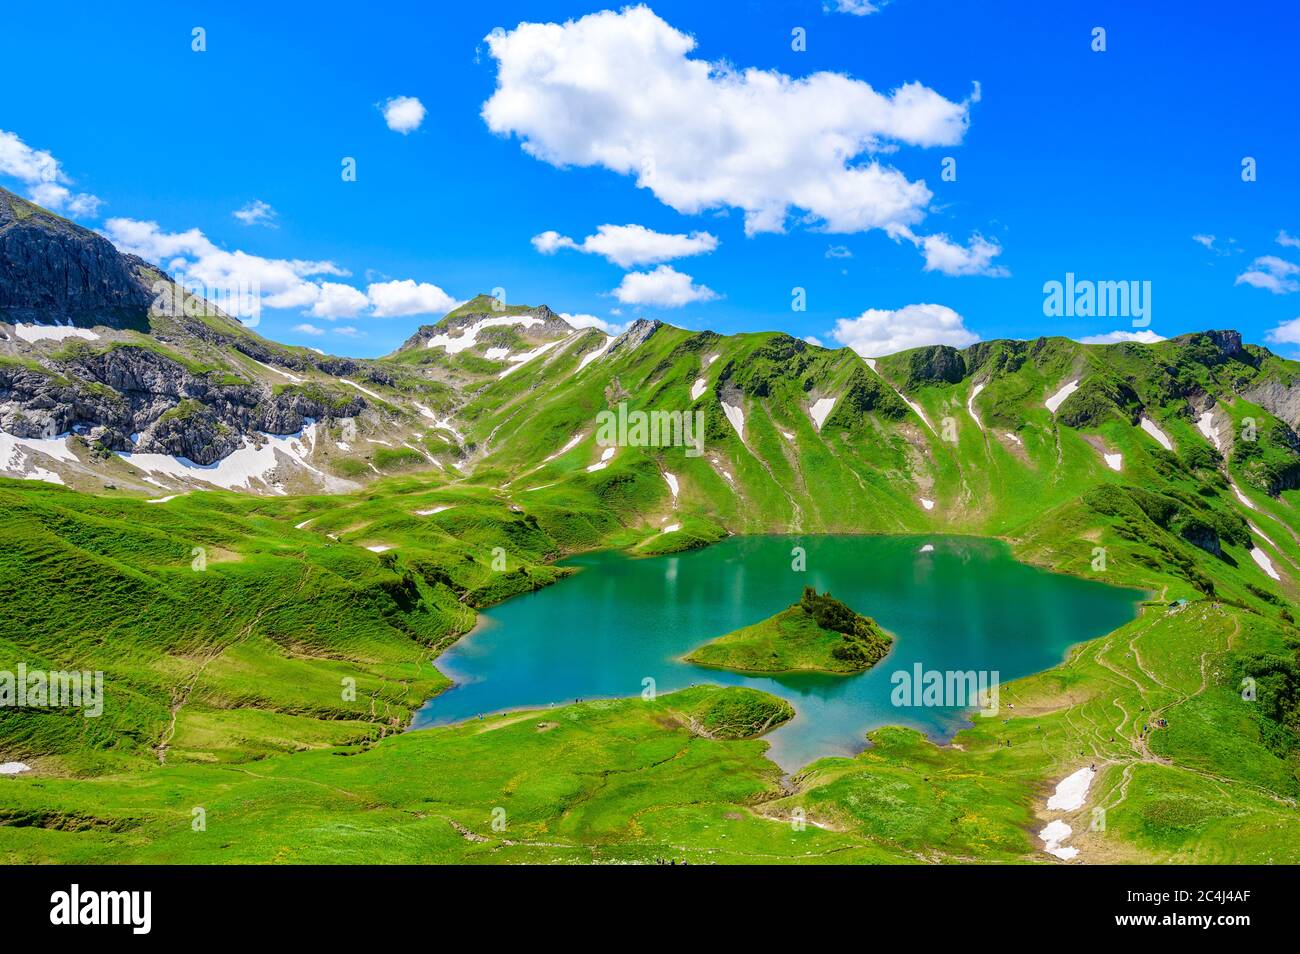 Lake Schrecksee - A beautiful turquoise alpine lake in the Allgaeu alps near Hinterstein, hiking destination in Bavaria, Germany Stock Photo